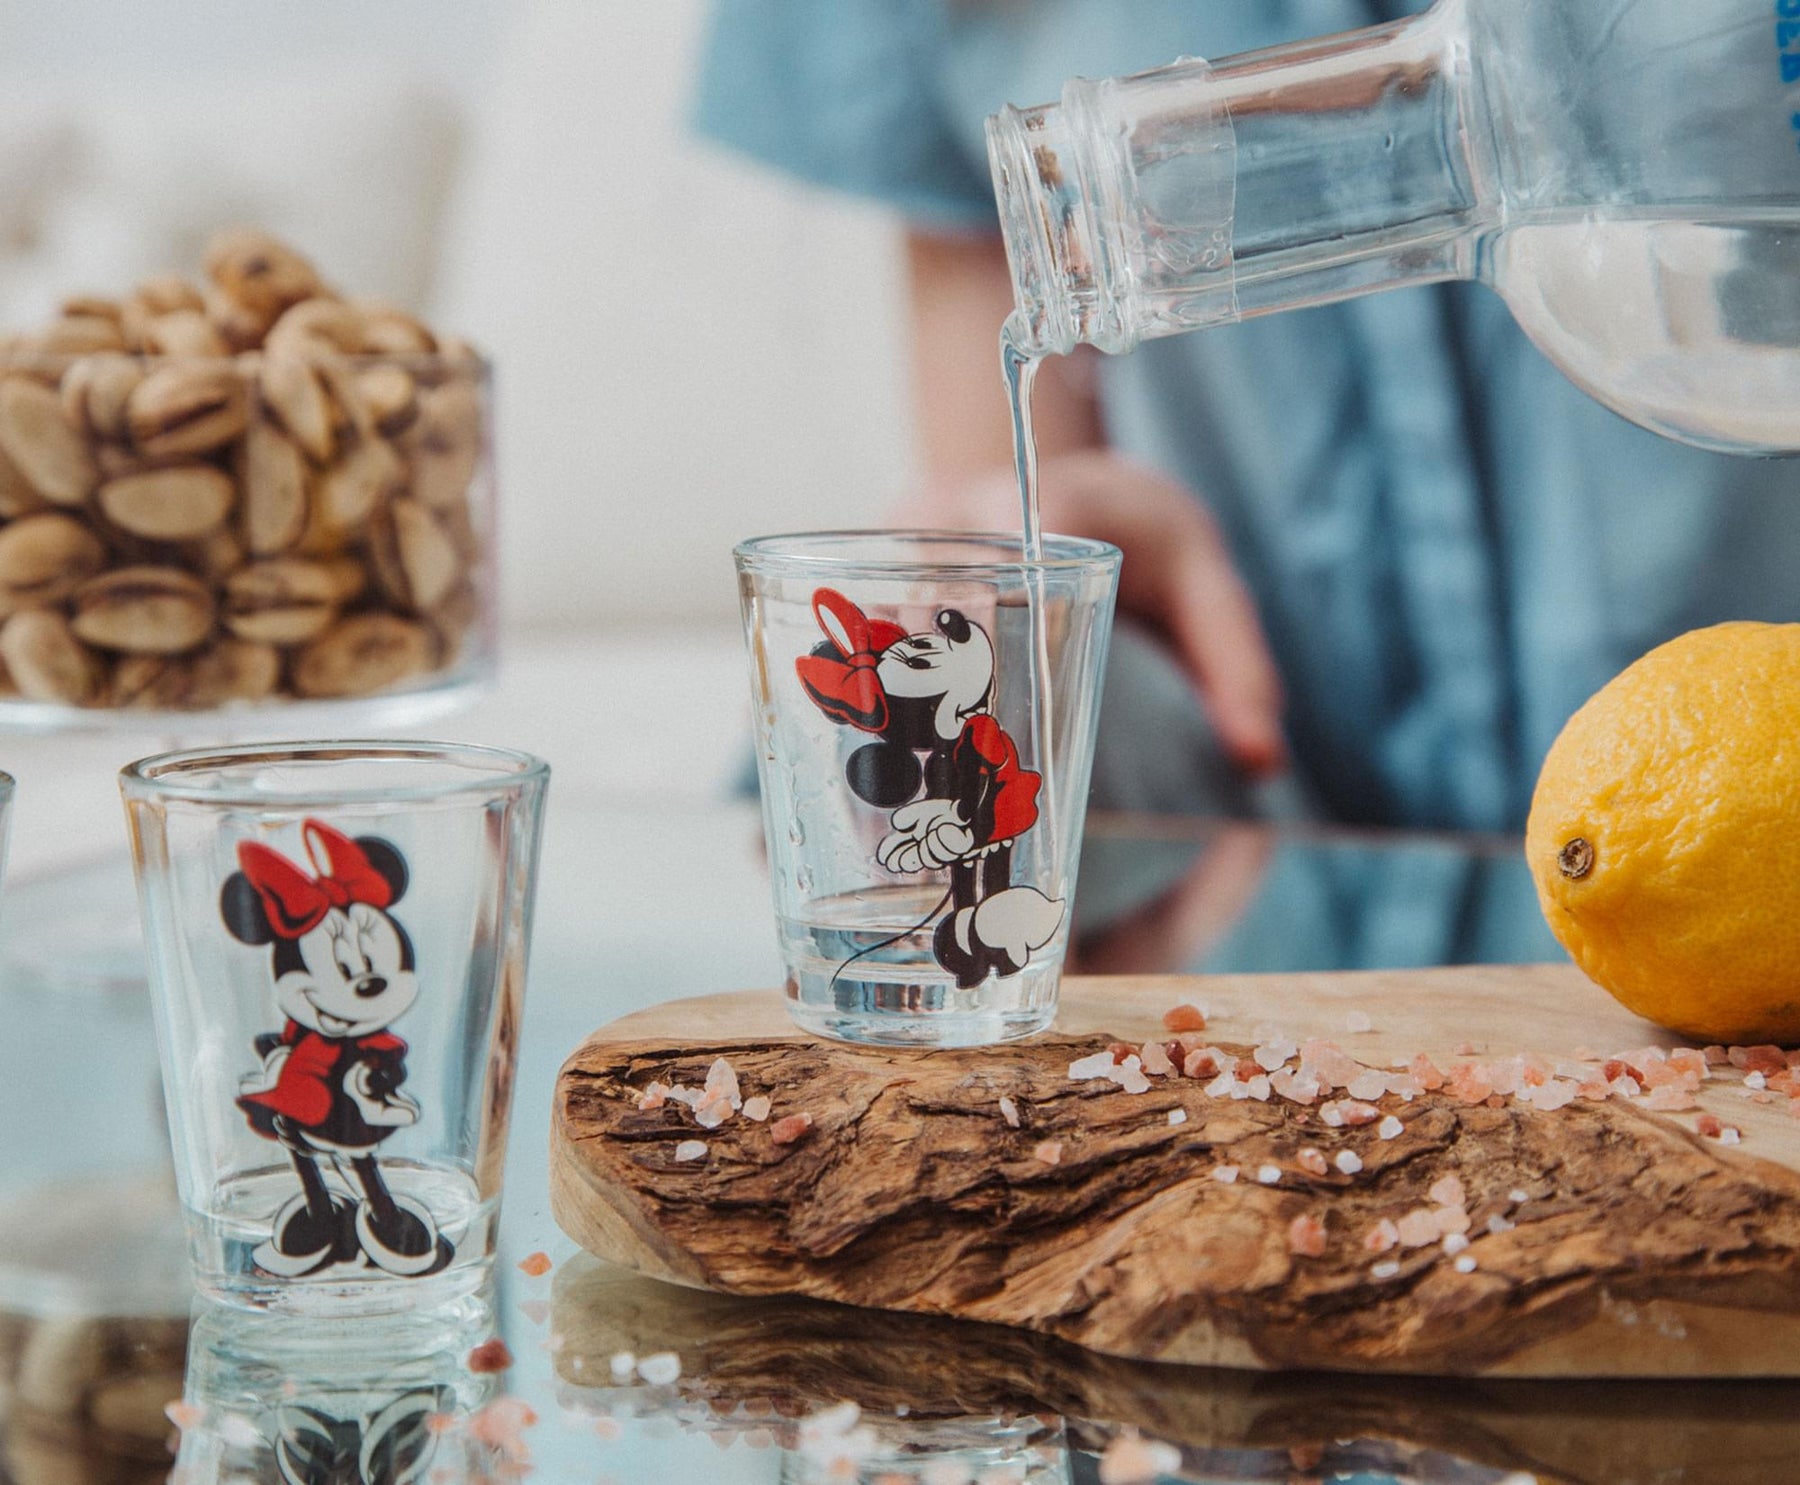 Disney Classic Minnie Mouse 2-Ounce Mini Shot Glasses | Set of 4